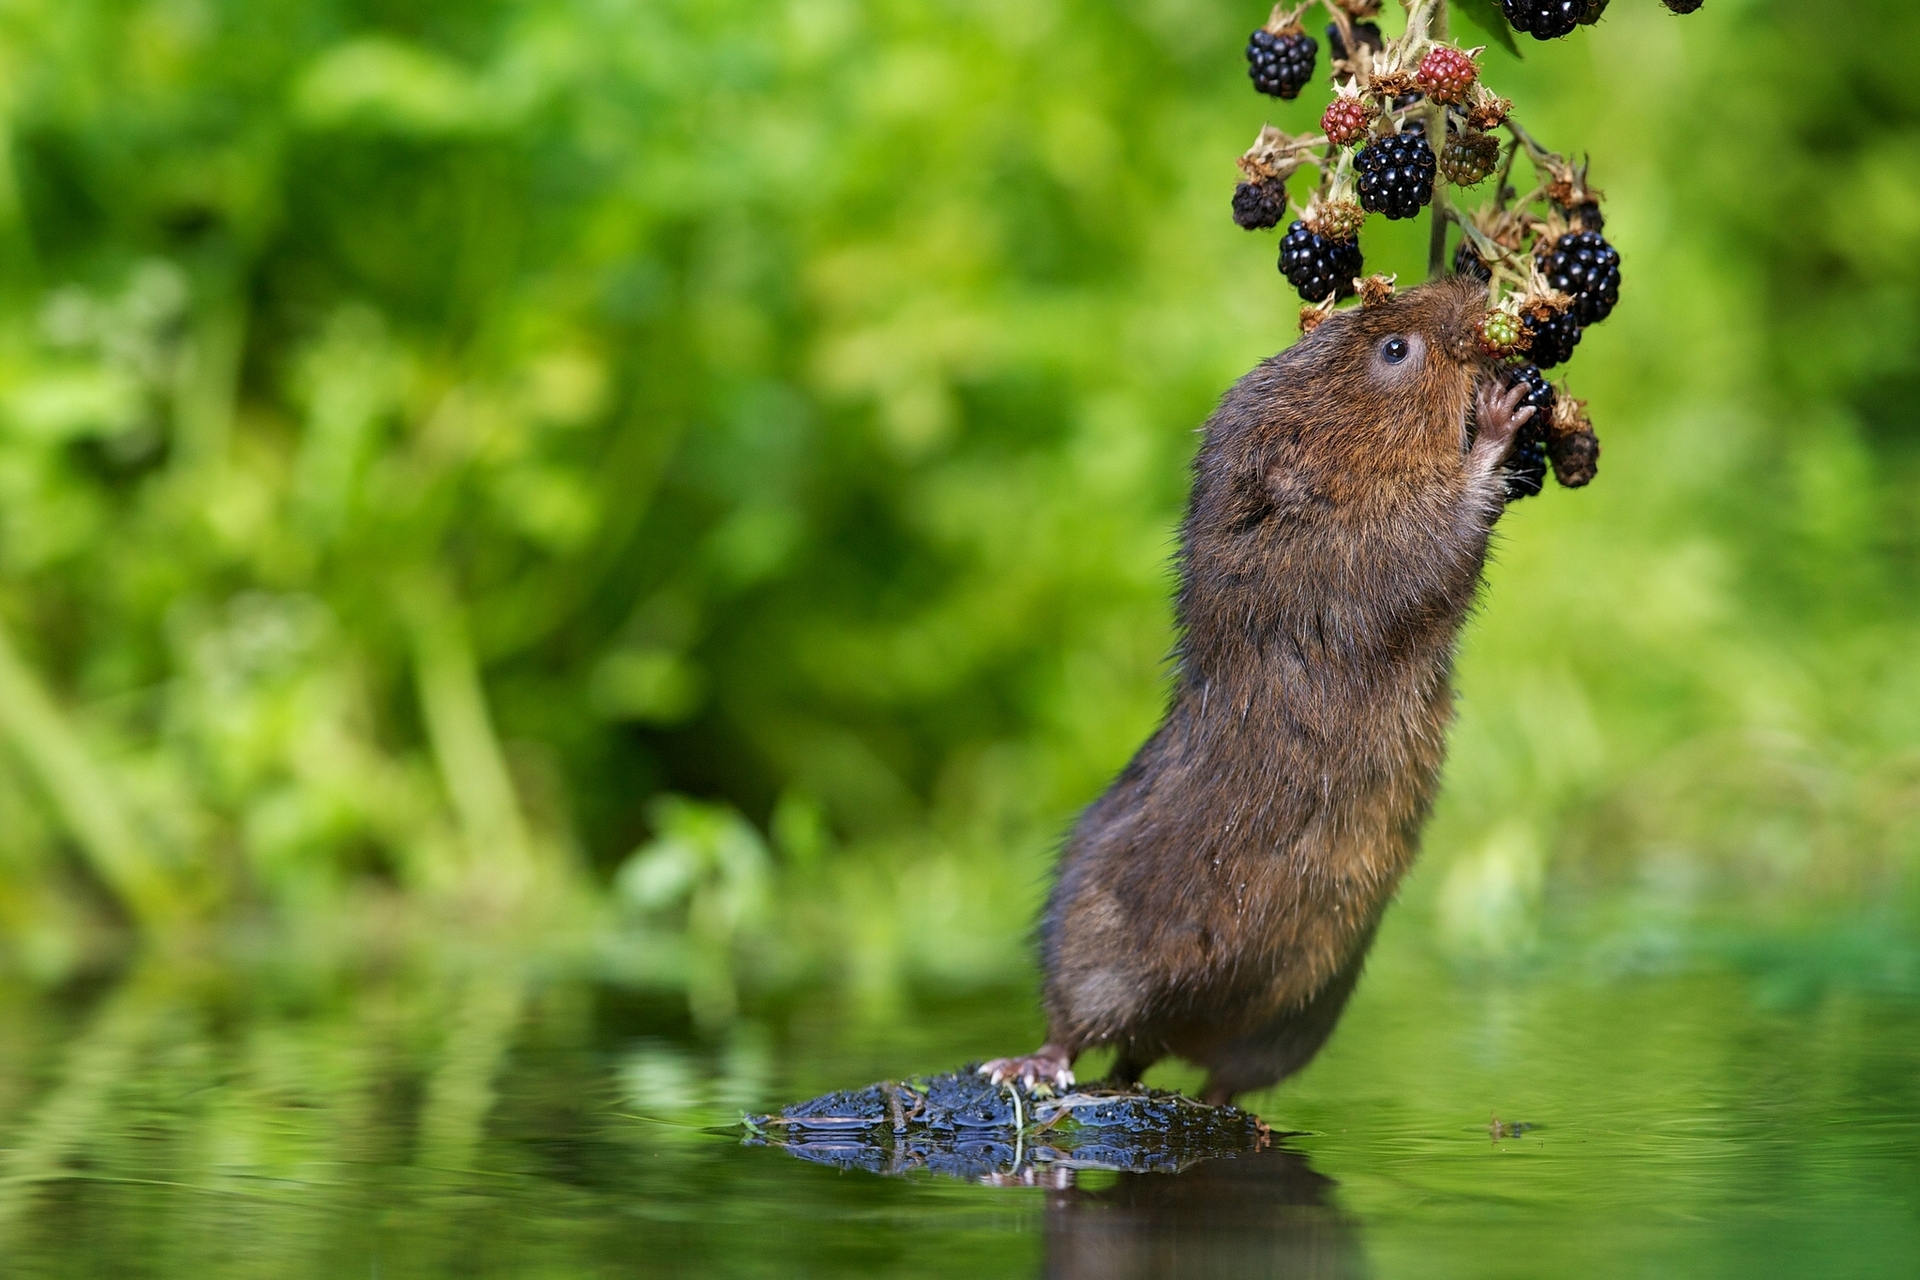 Water vole reaching for blackberries